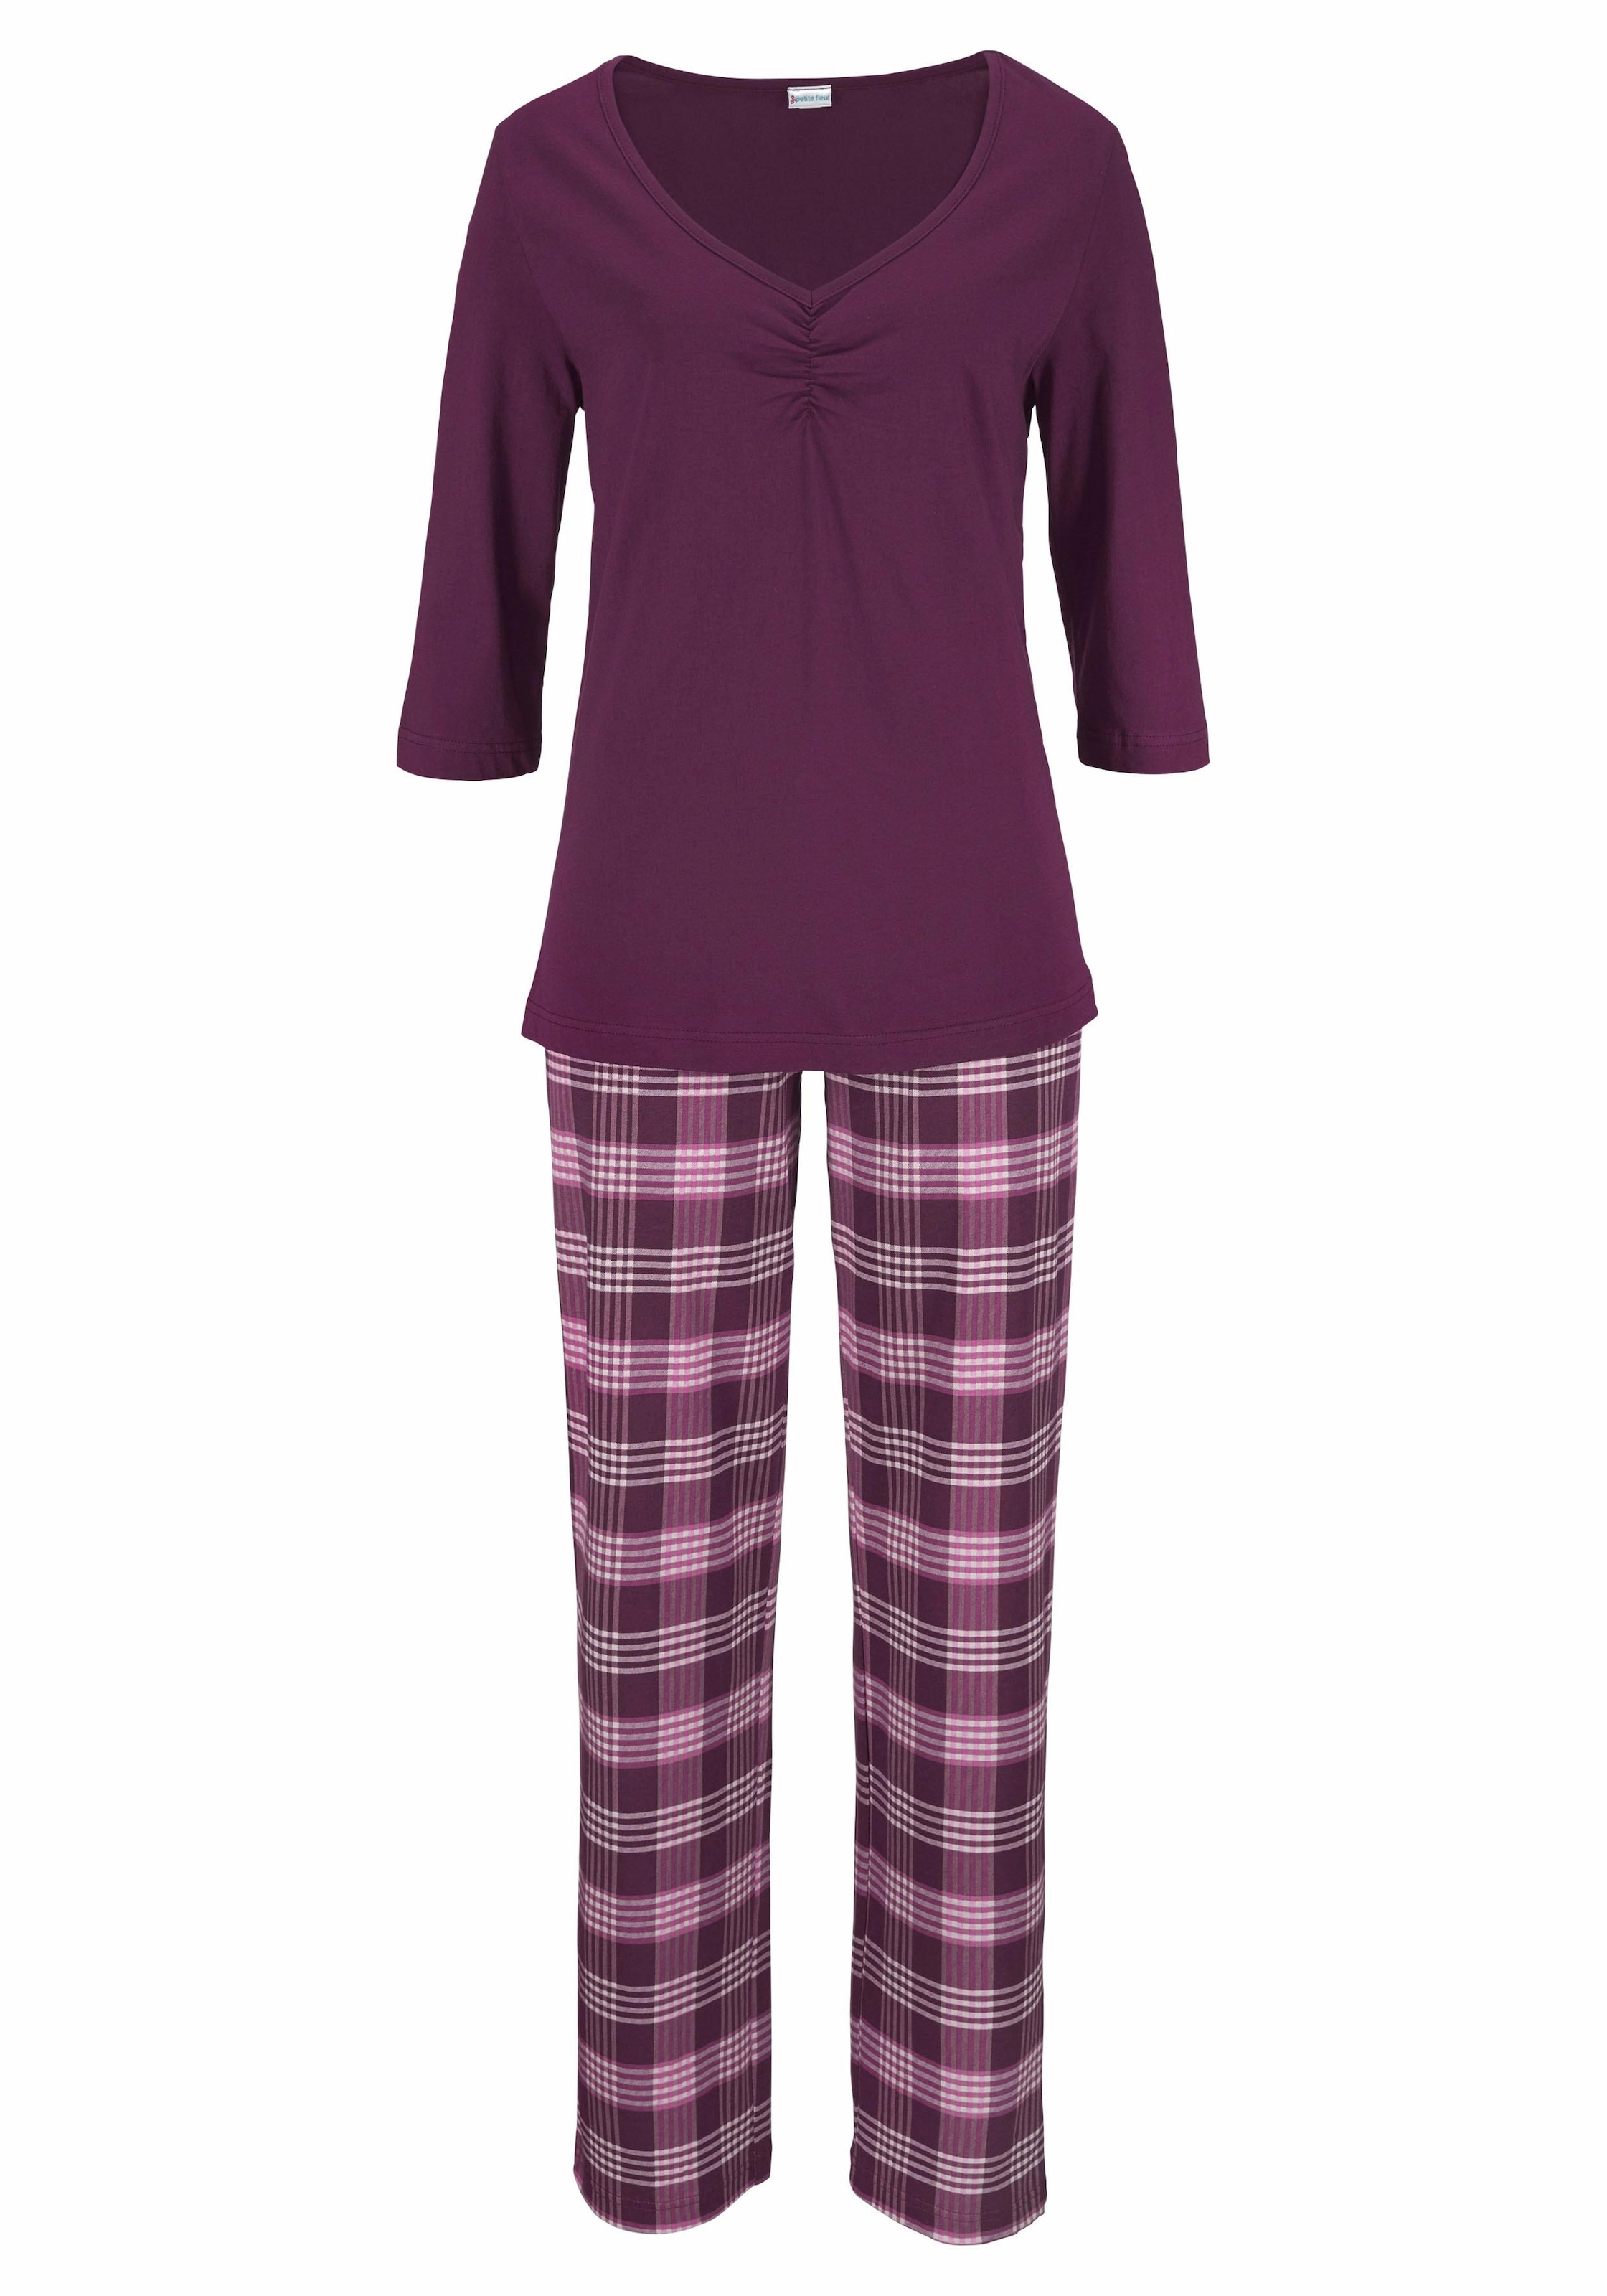 petite fleur Pyjama (4 2 Stück) Hose mit tlg. karierter